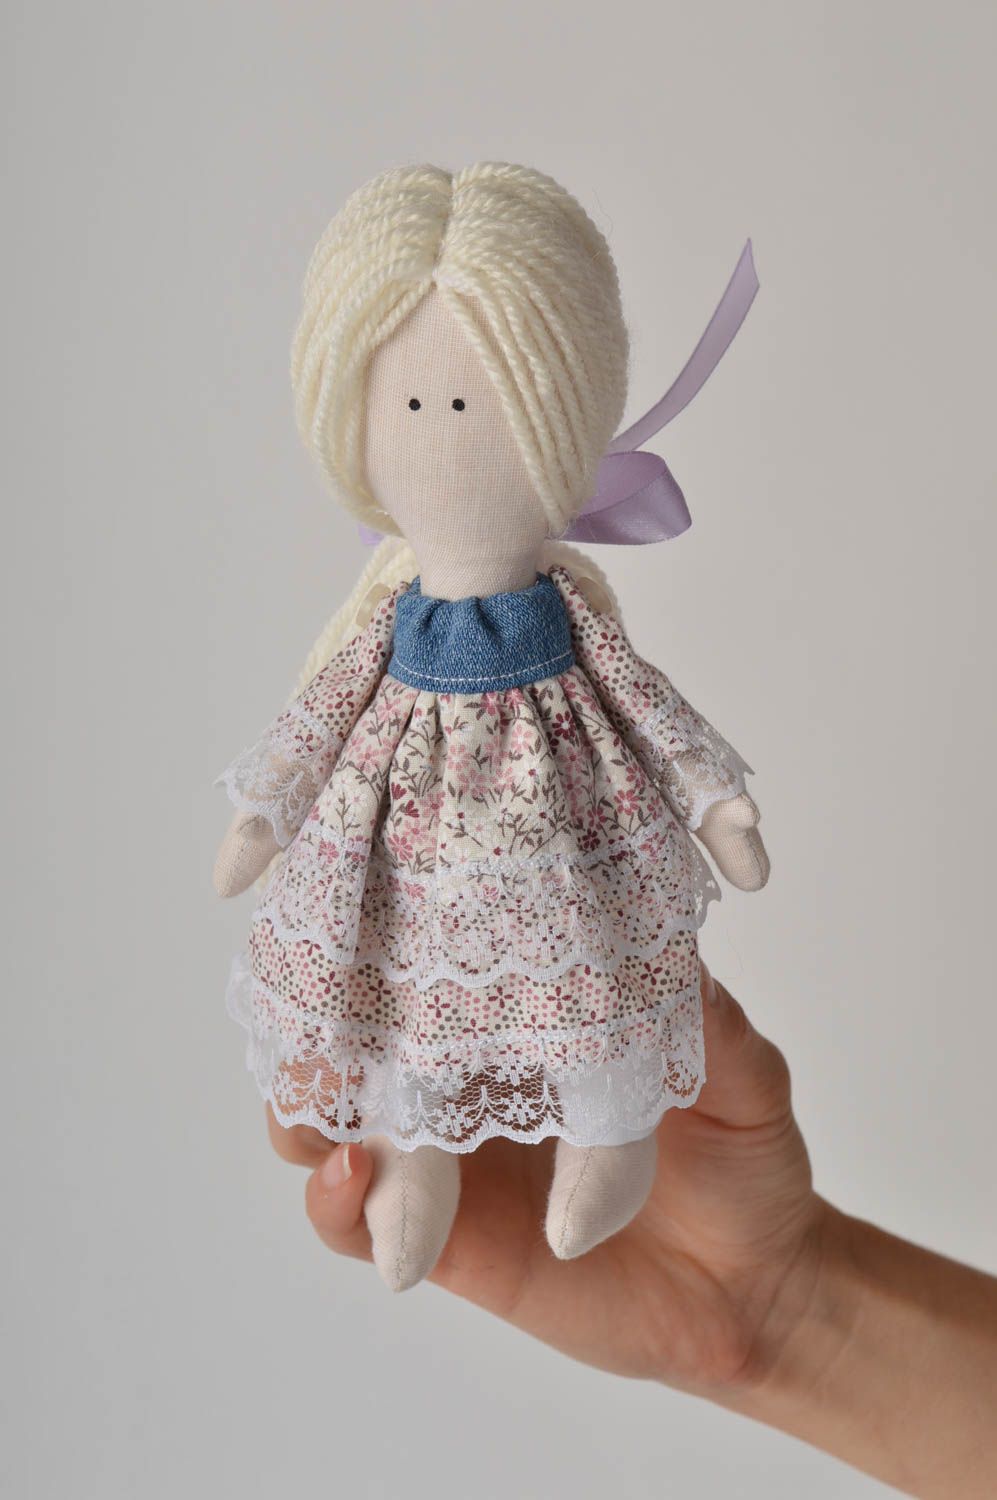 Handmade doll designer doll unusual doll gift ideas decor ideas home decor photo 5